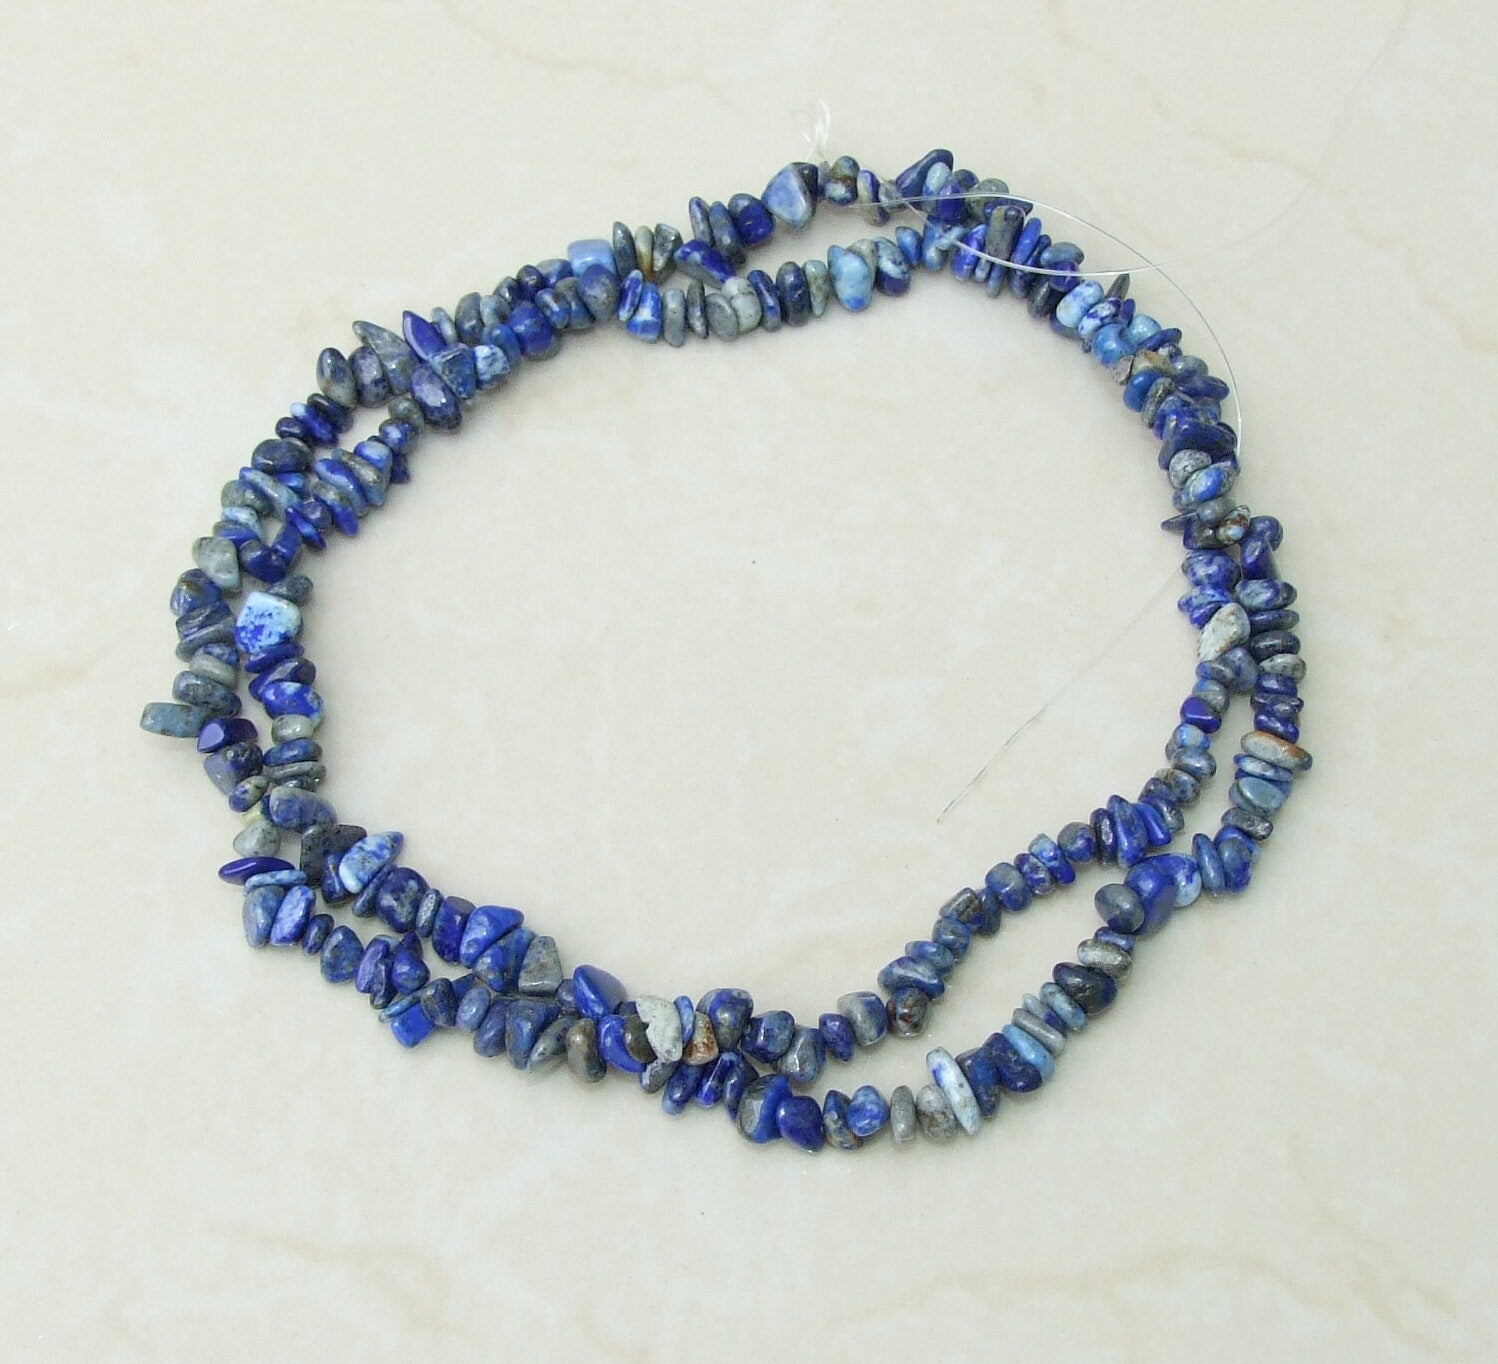 Small Lapis Chips, Polished Lapis Beads, Gemstone Beads, Jewelry Stones, Natural Lapis, Lapis Lazuli, 31.5" Strand, 5mm - 8mm